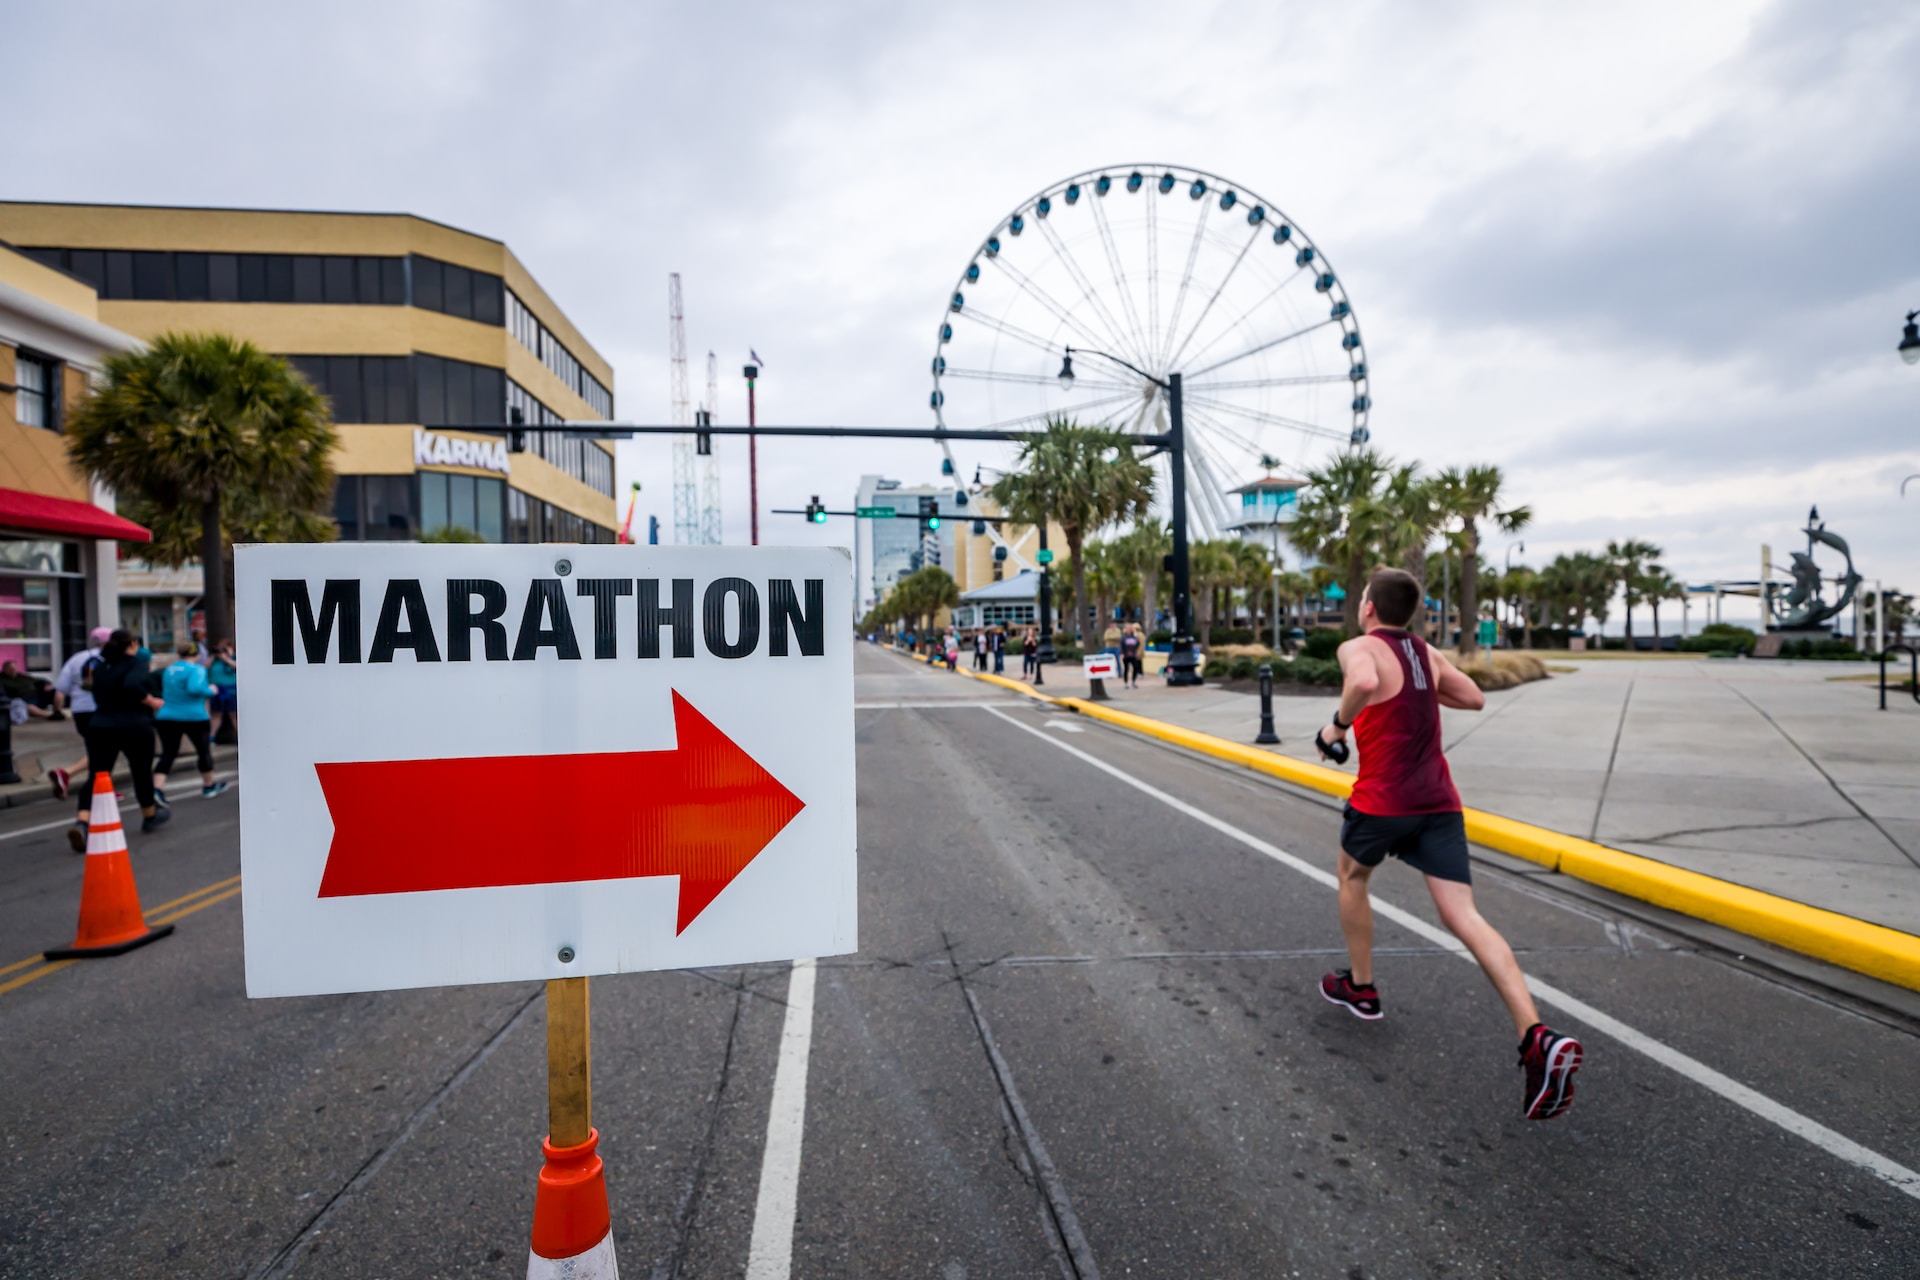 the image shows a running marathon 